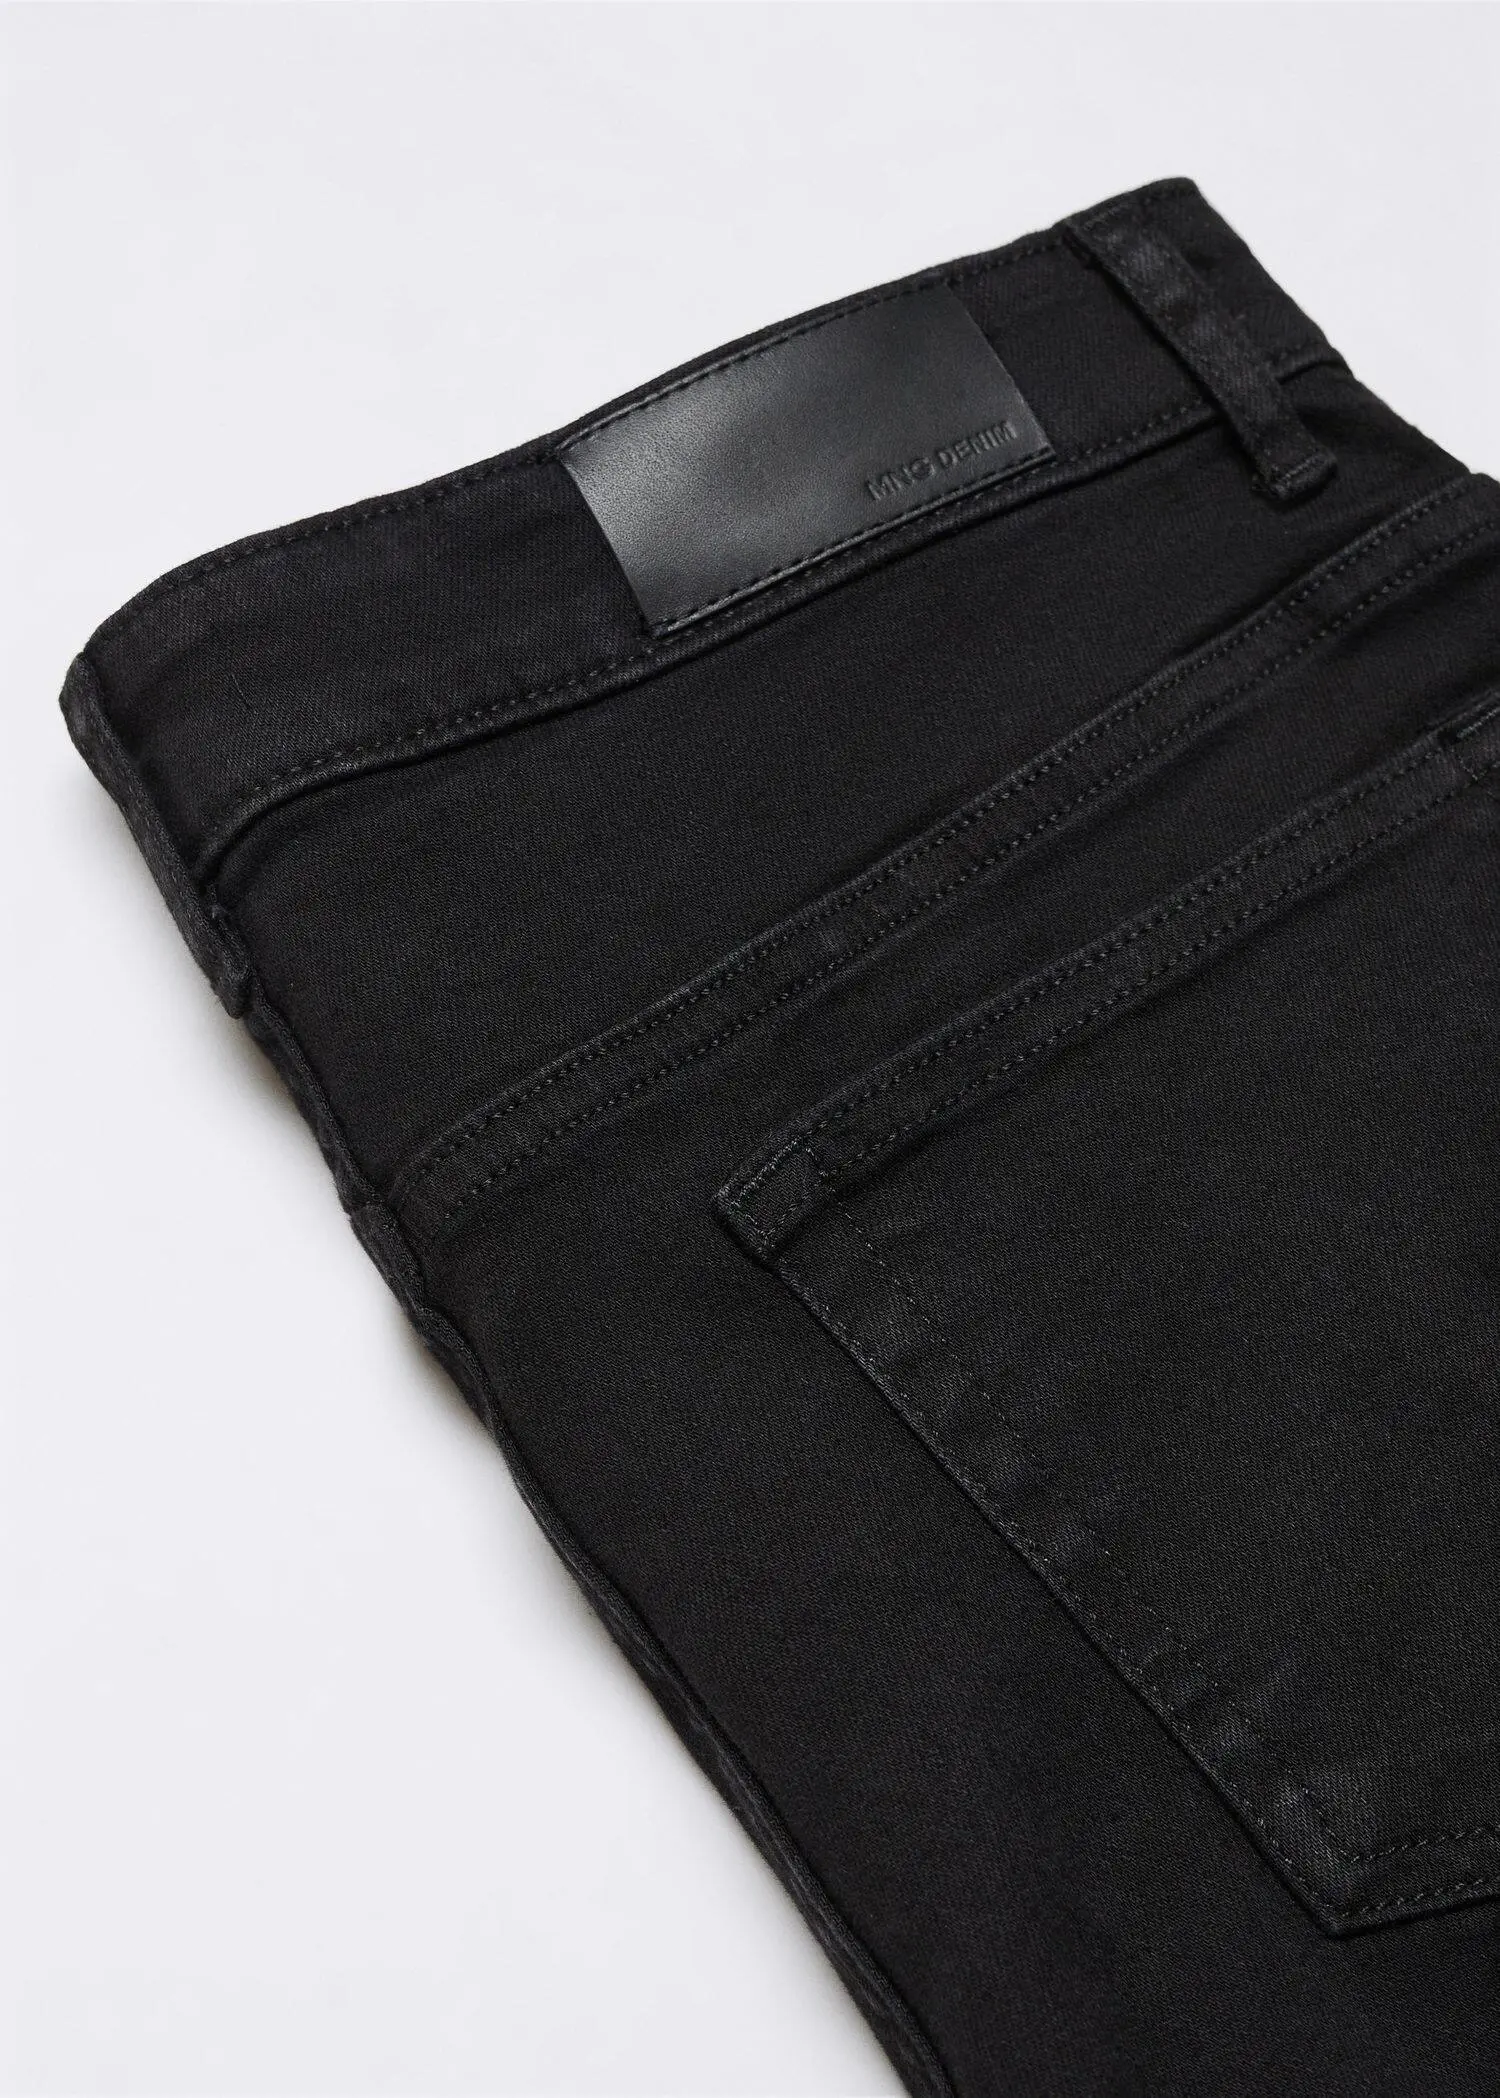 Mango Jeans Patrick slim fit Ultra Soft Touch. 2